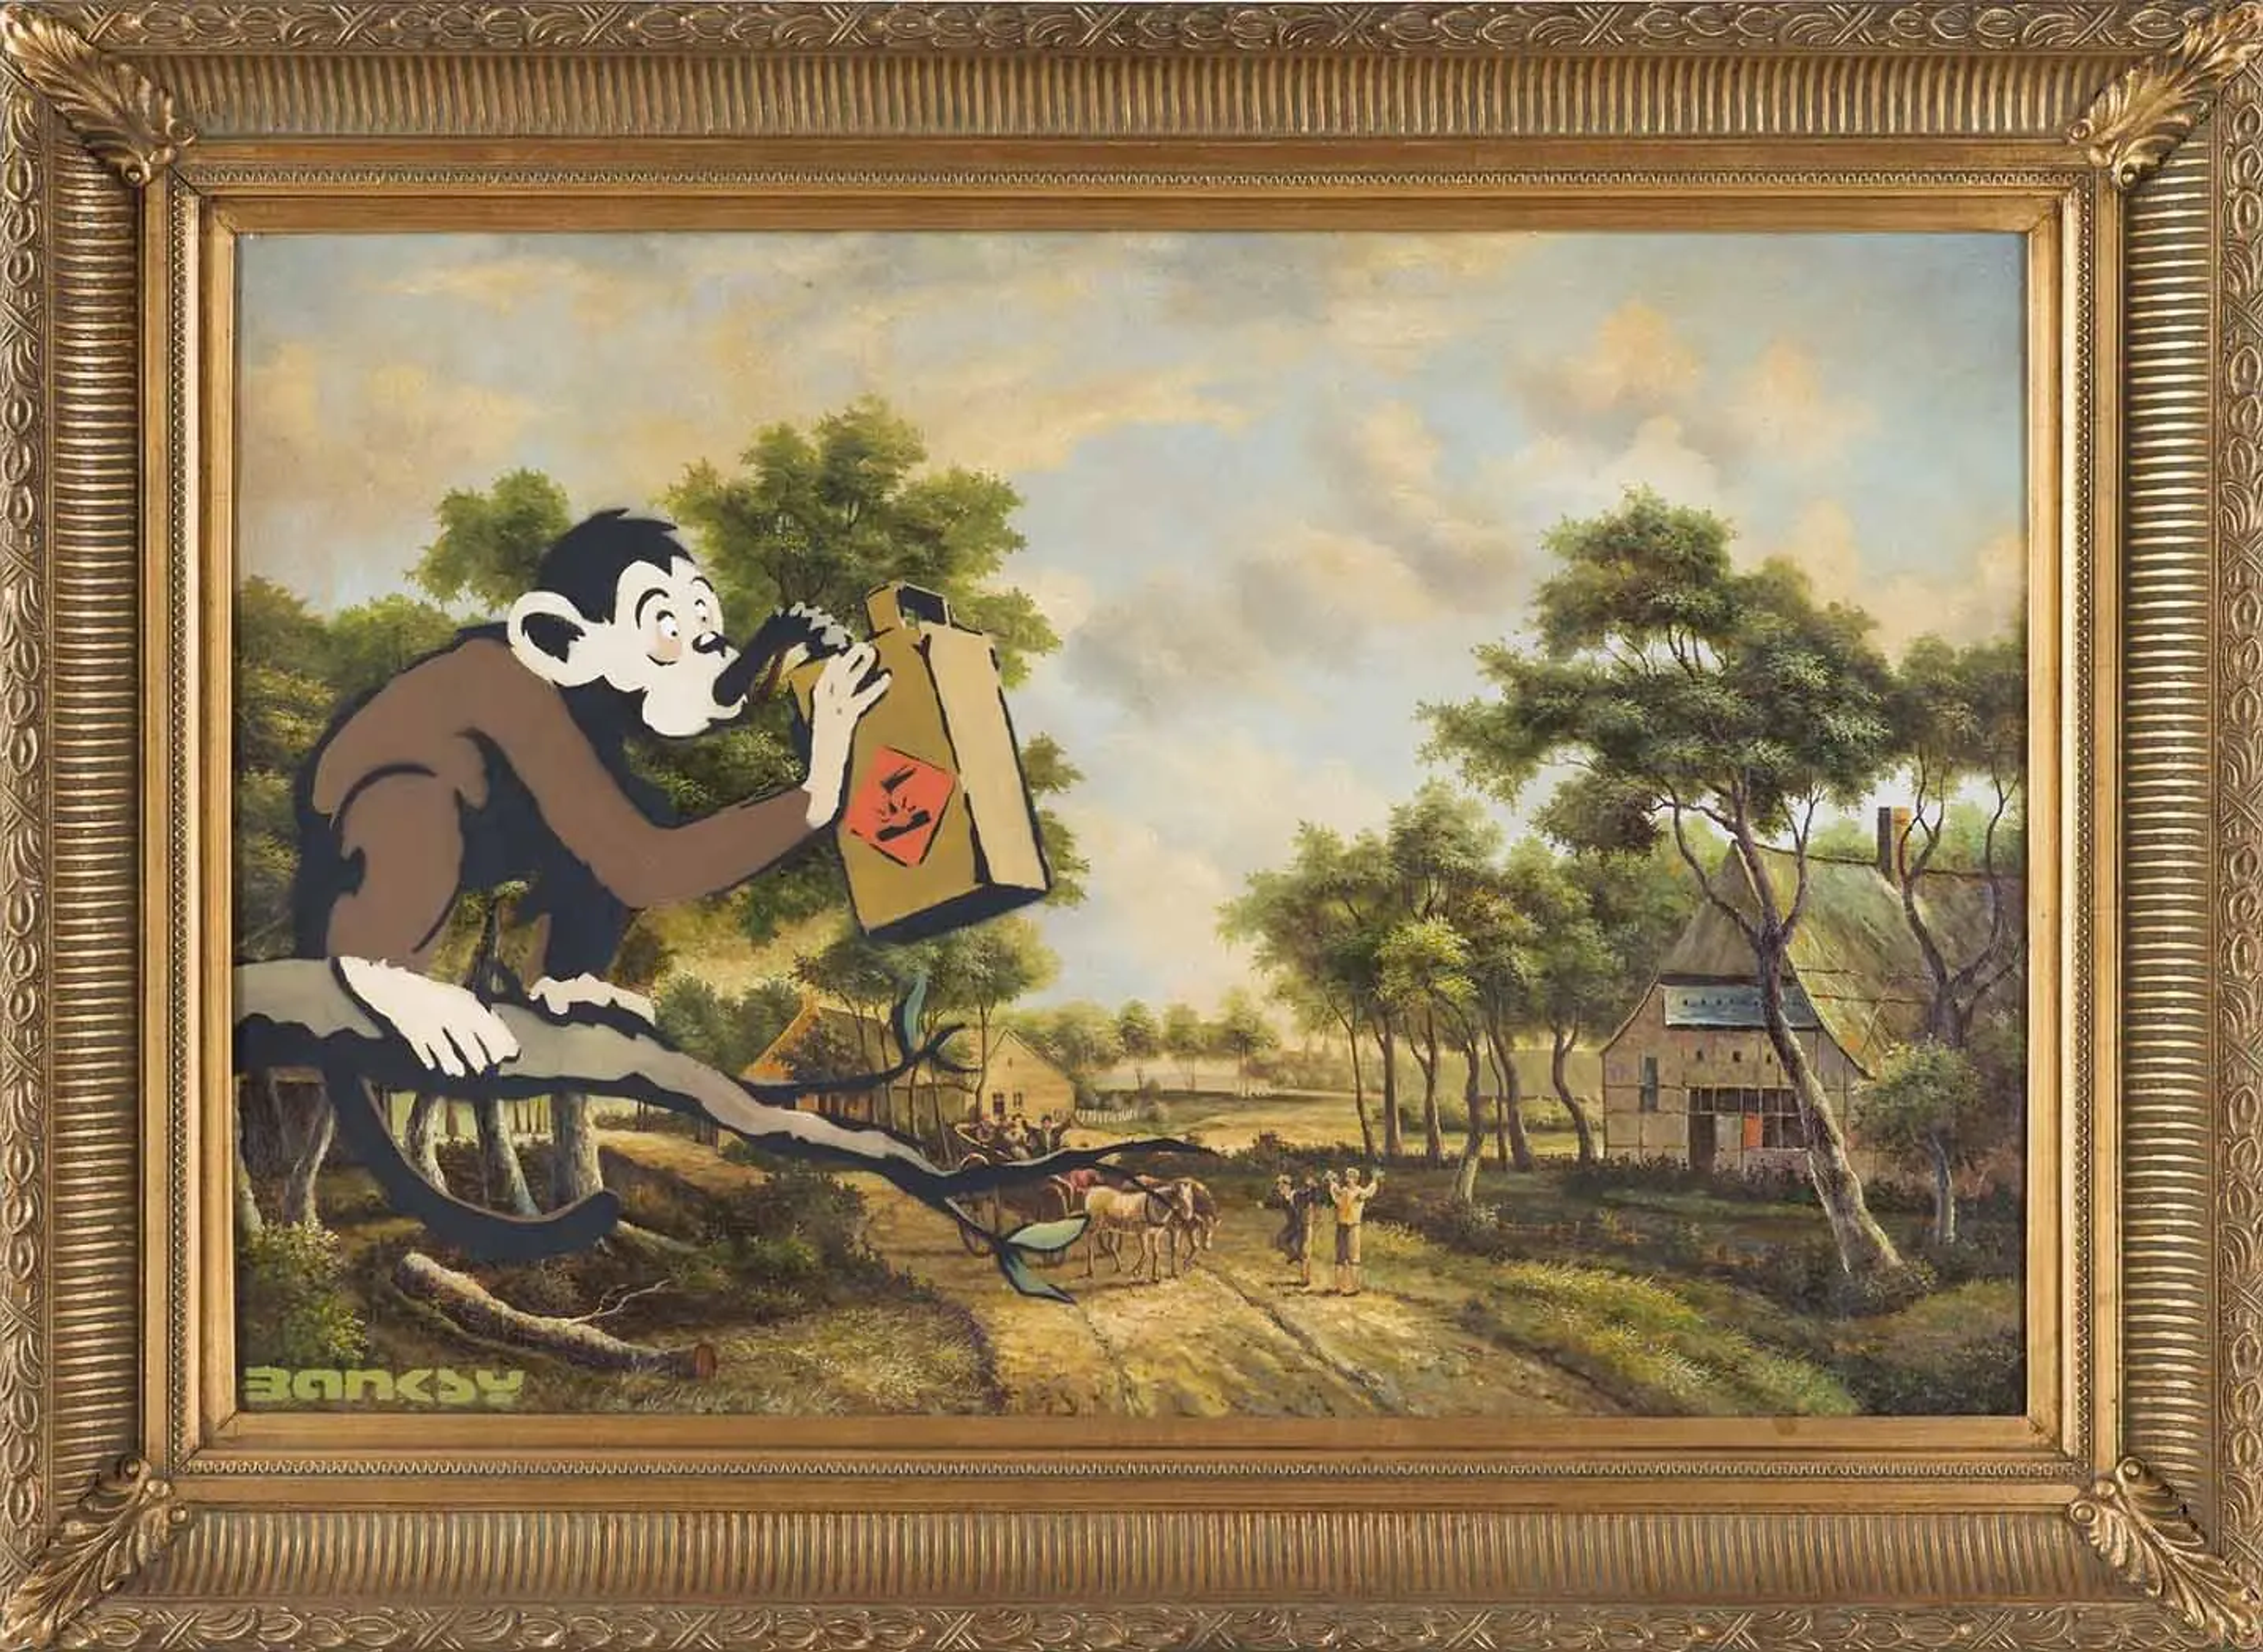 Banksy's Monkey Poison